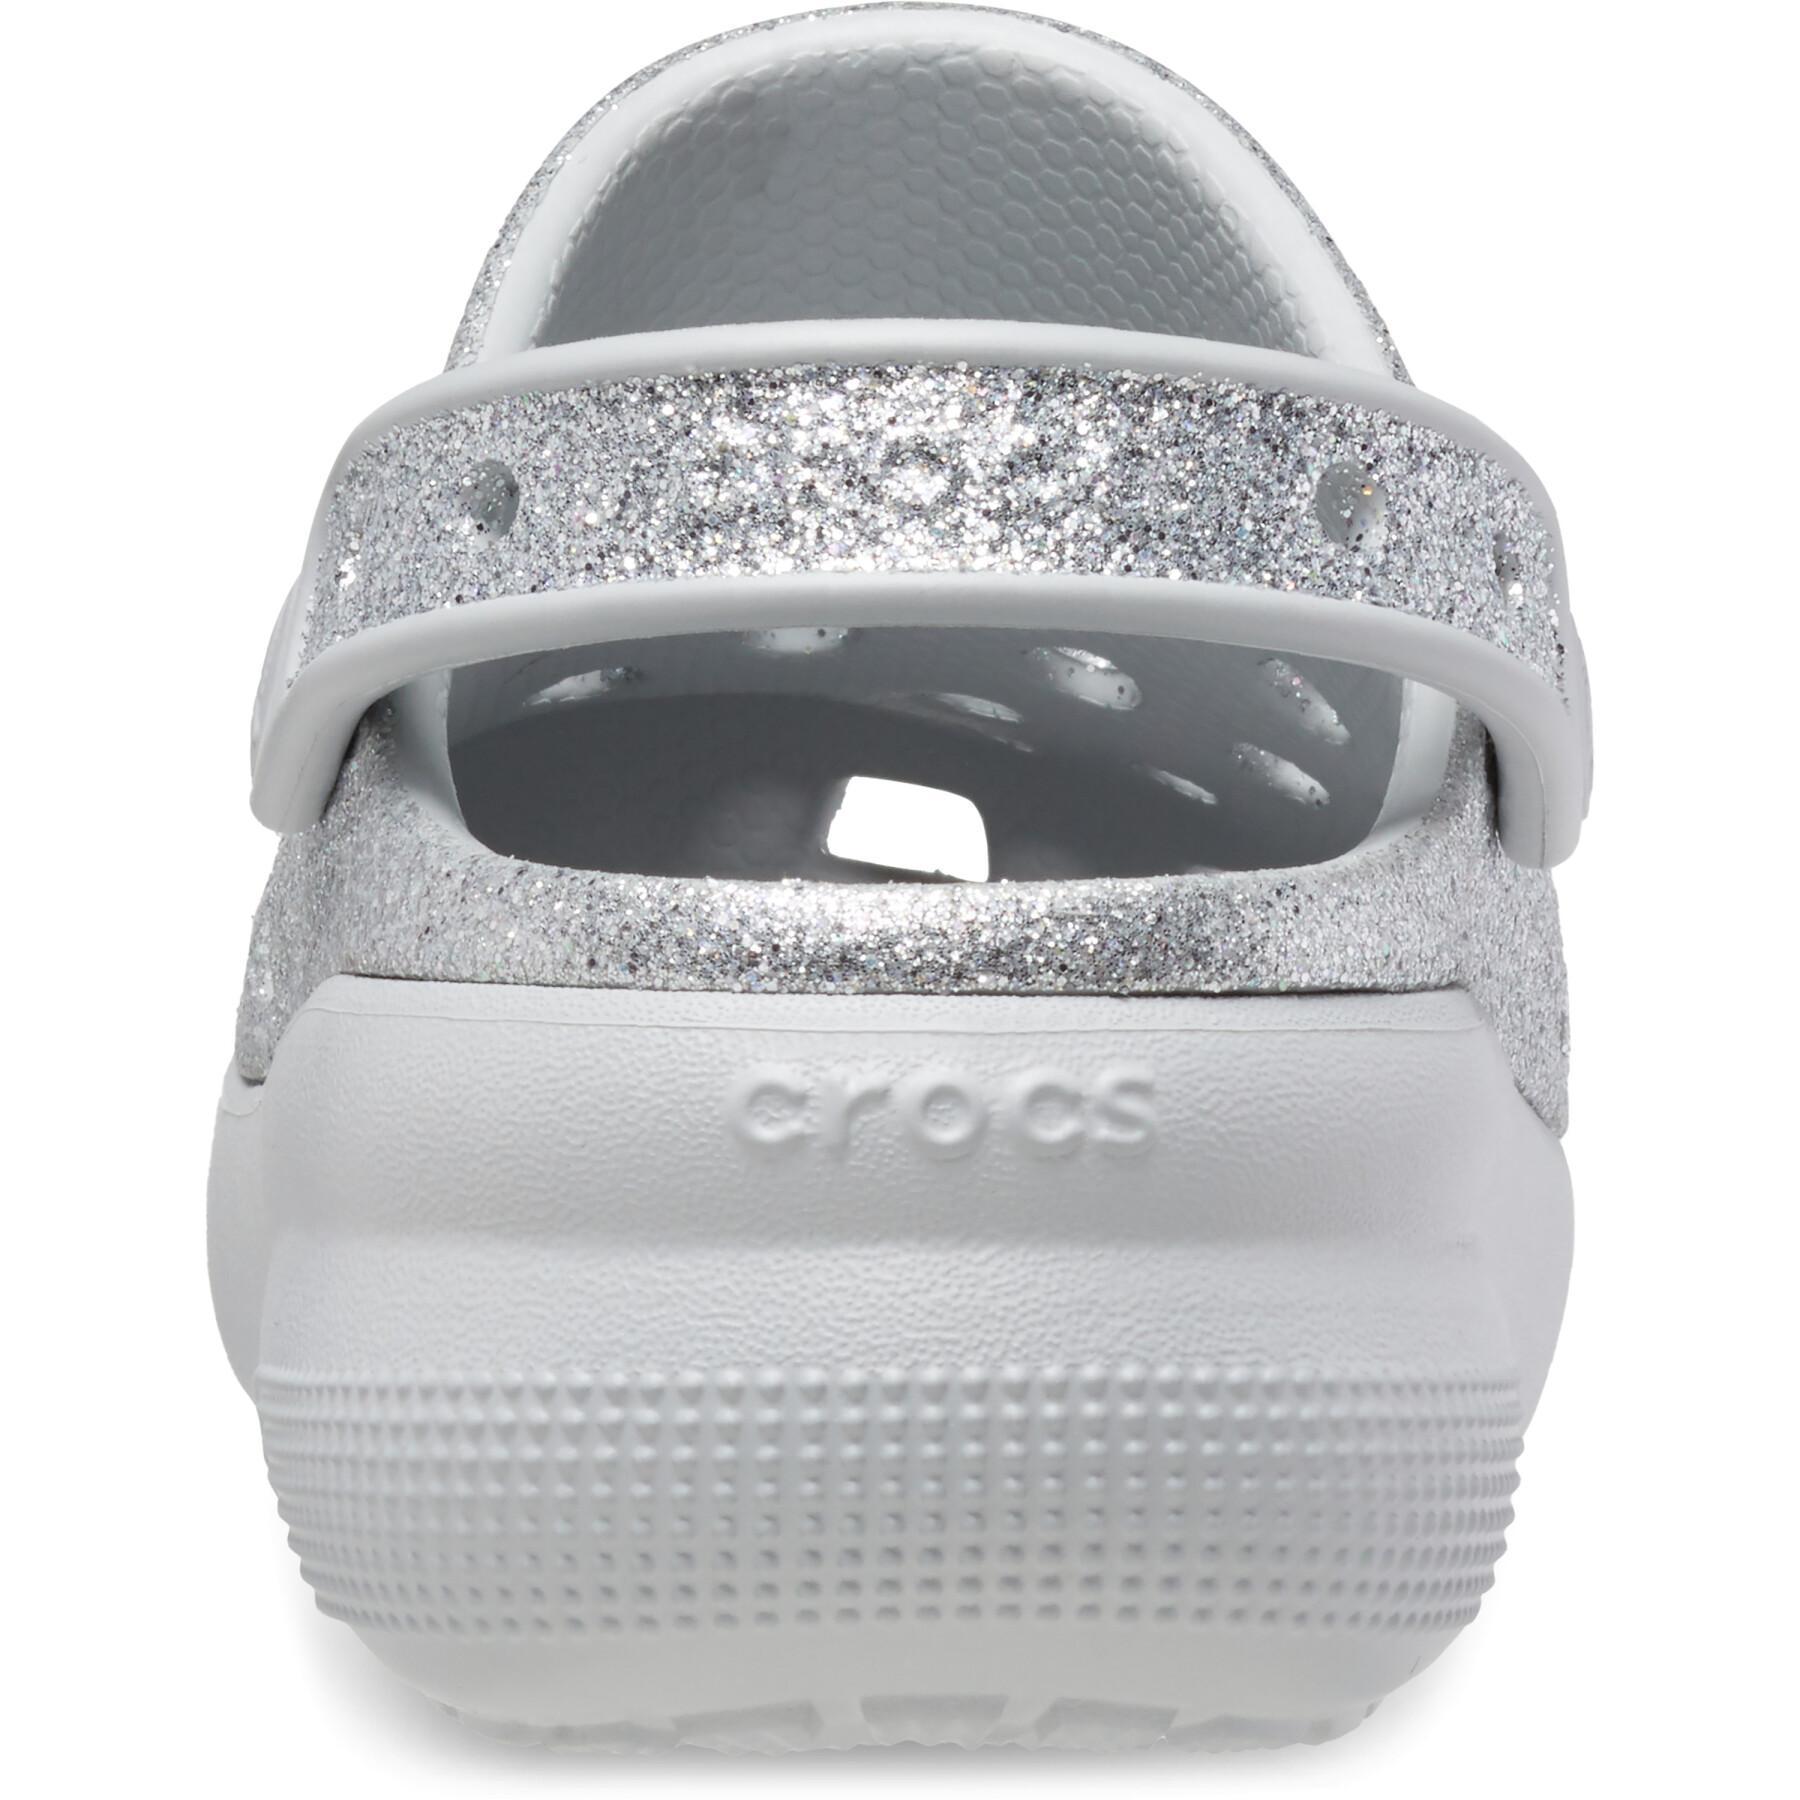 Kinderklompen Crocs Cutie Crush Glitter